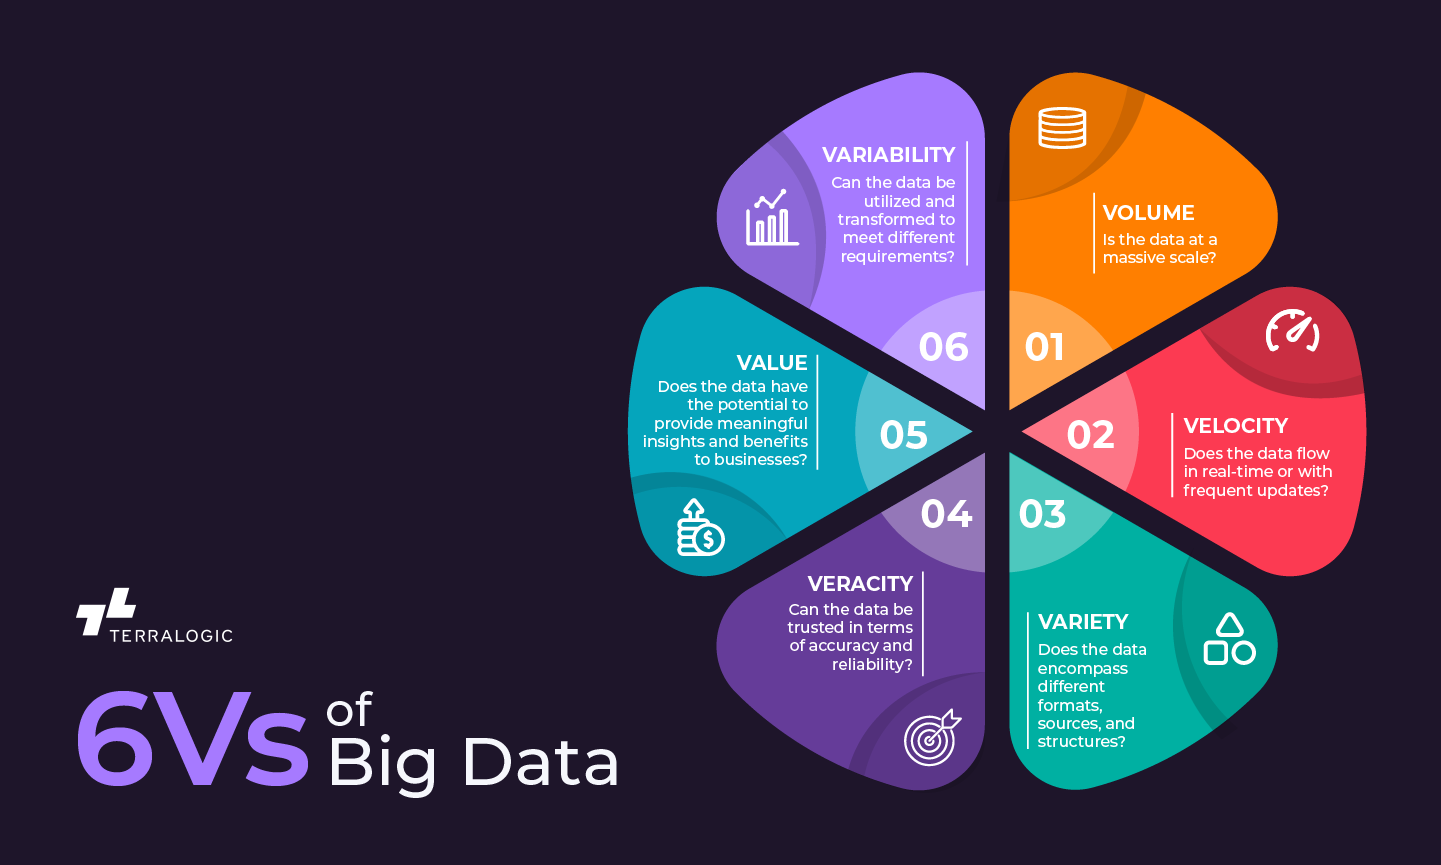 6Vs of Big Data